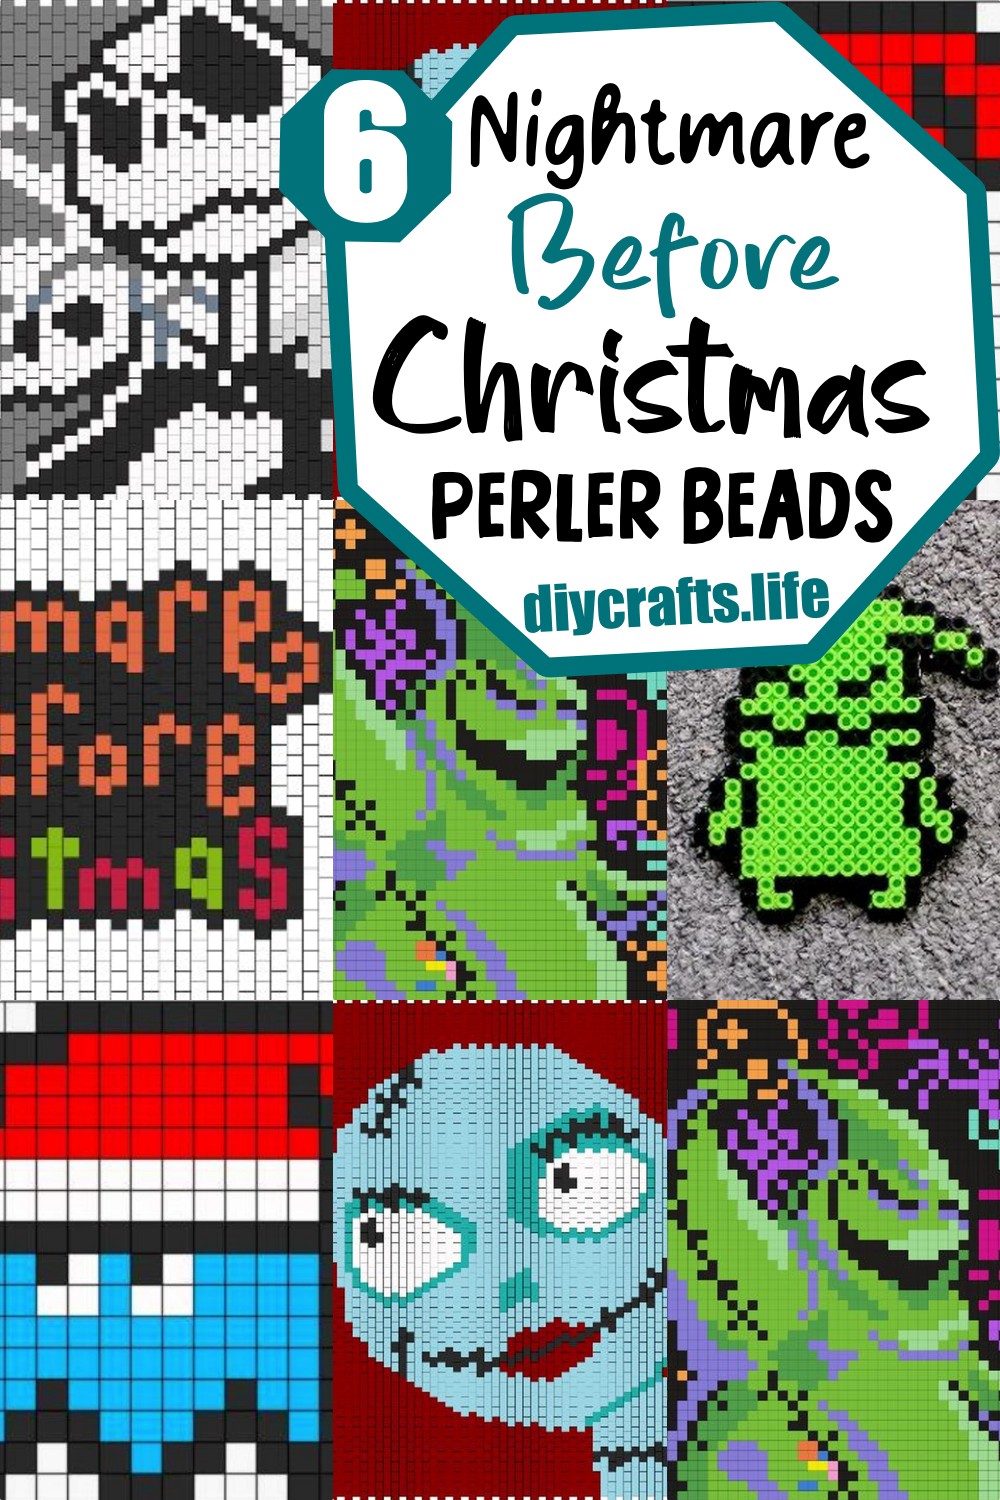 Nightmare Before Christmas Perler Beads